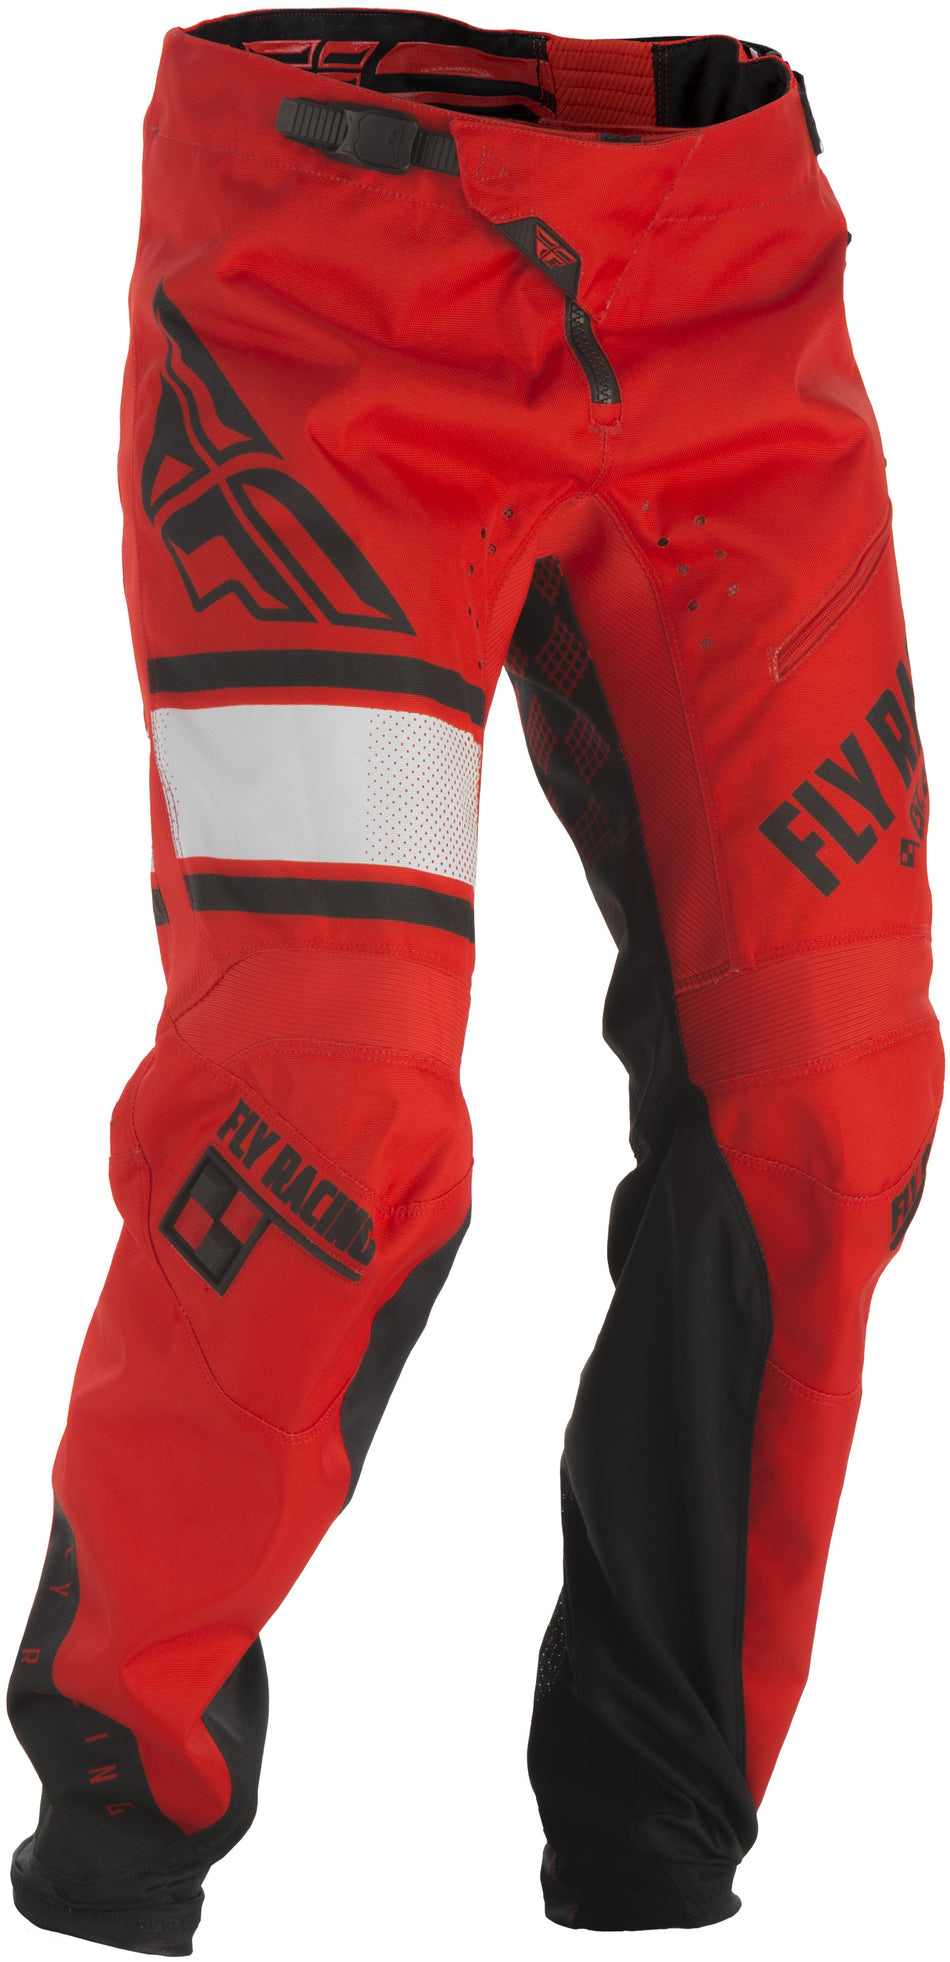 FLY RACING Kinetic Era Bicycle Pants Red/Black Sz 24 371-02224